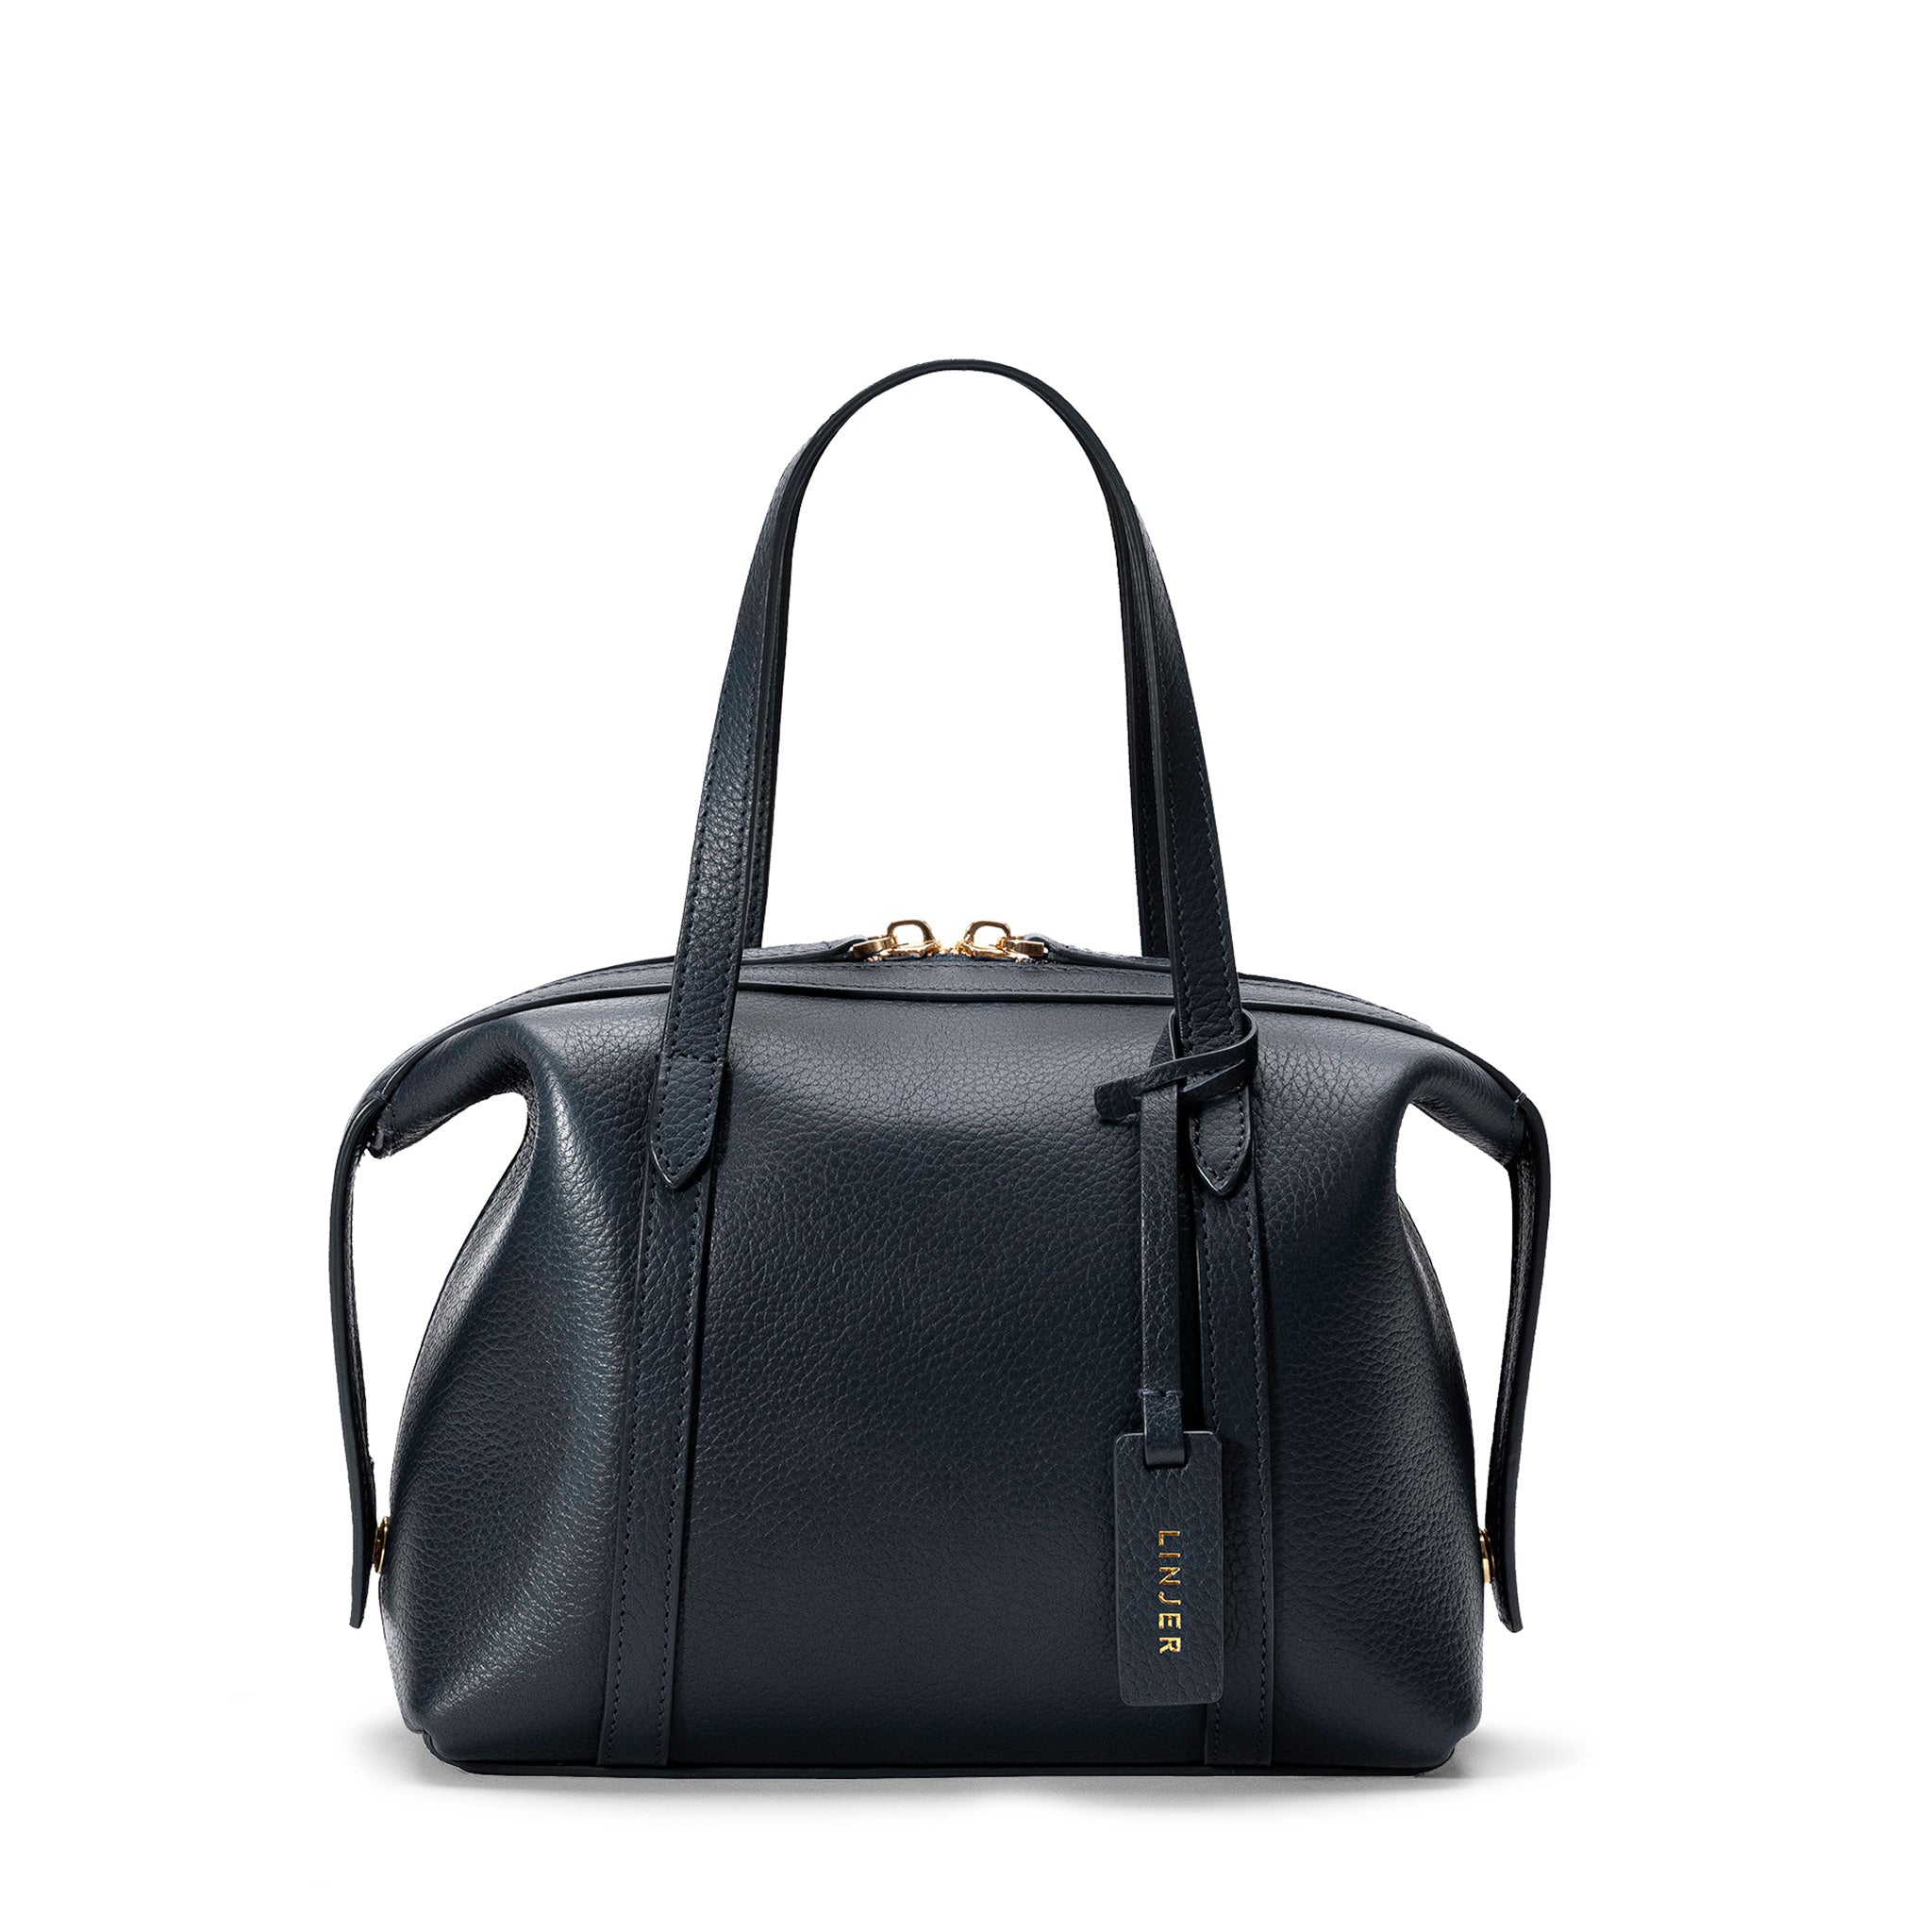 Linjer Bowler Bag, Small - Women, Black, Premium Italian Leather